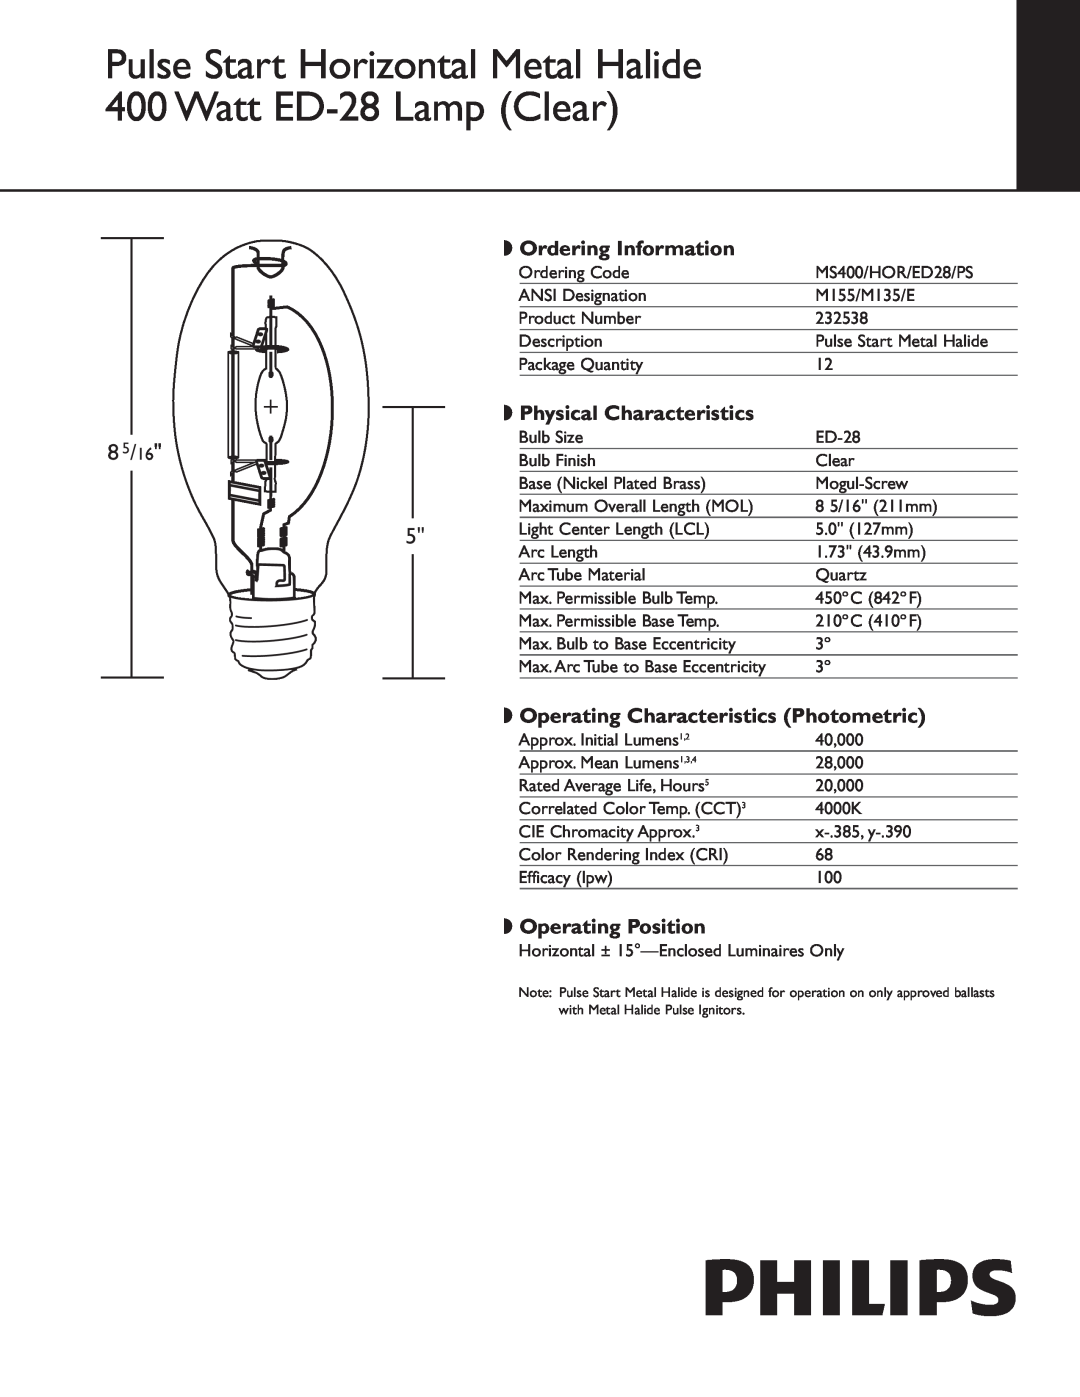 Philips 232538 manual 8 5/16, Ordering Information, Physical Characteristics, Operating Characteristics Photometric 